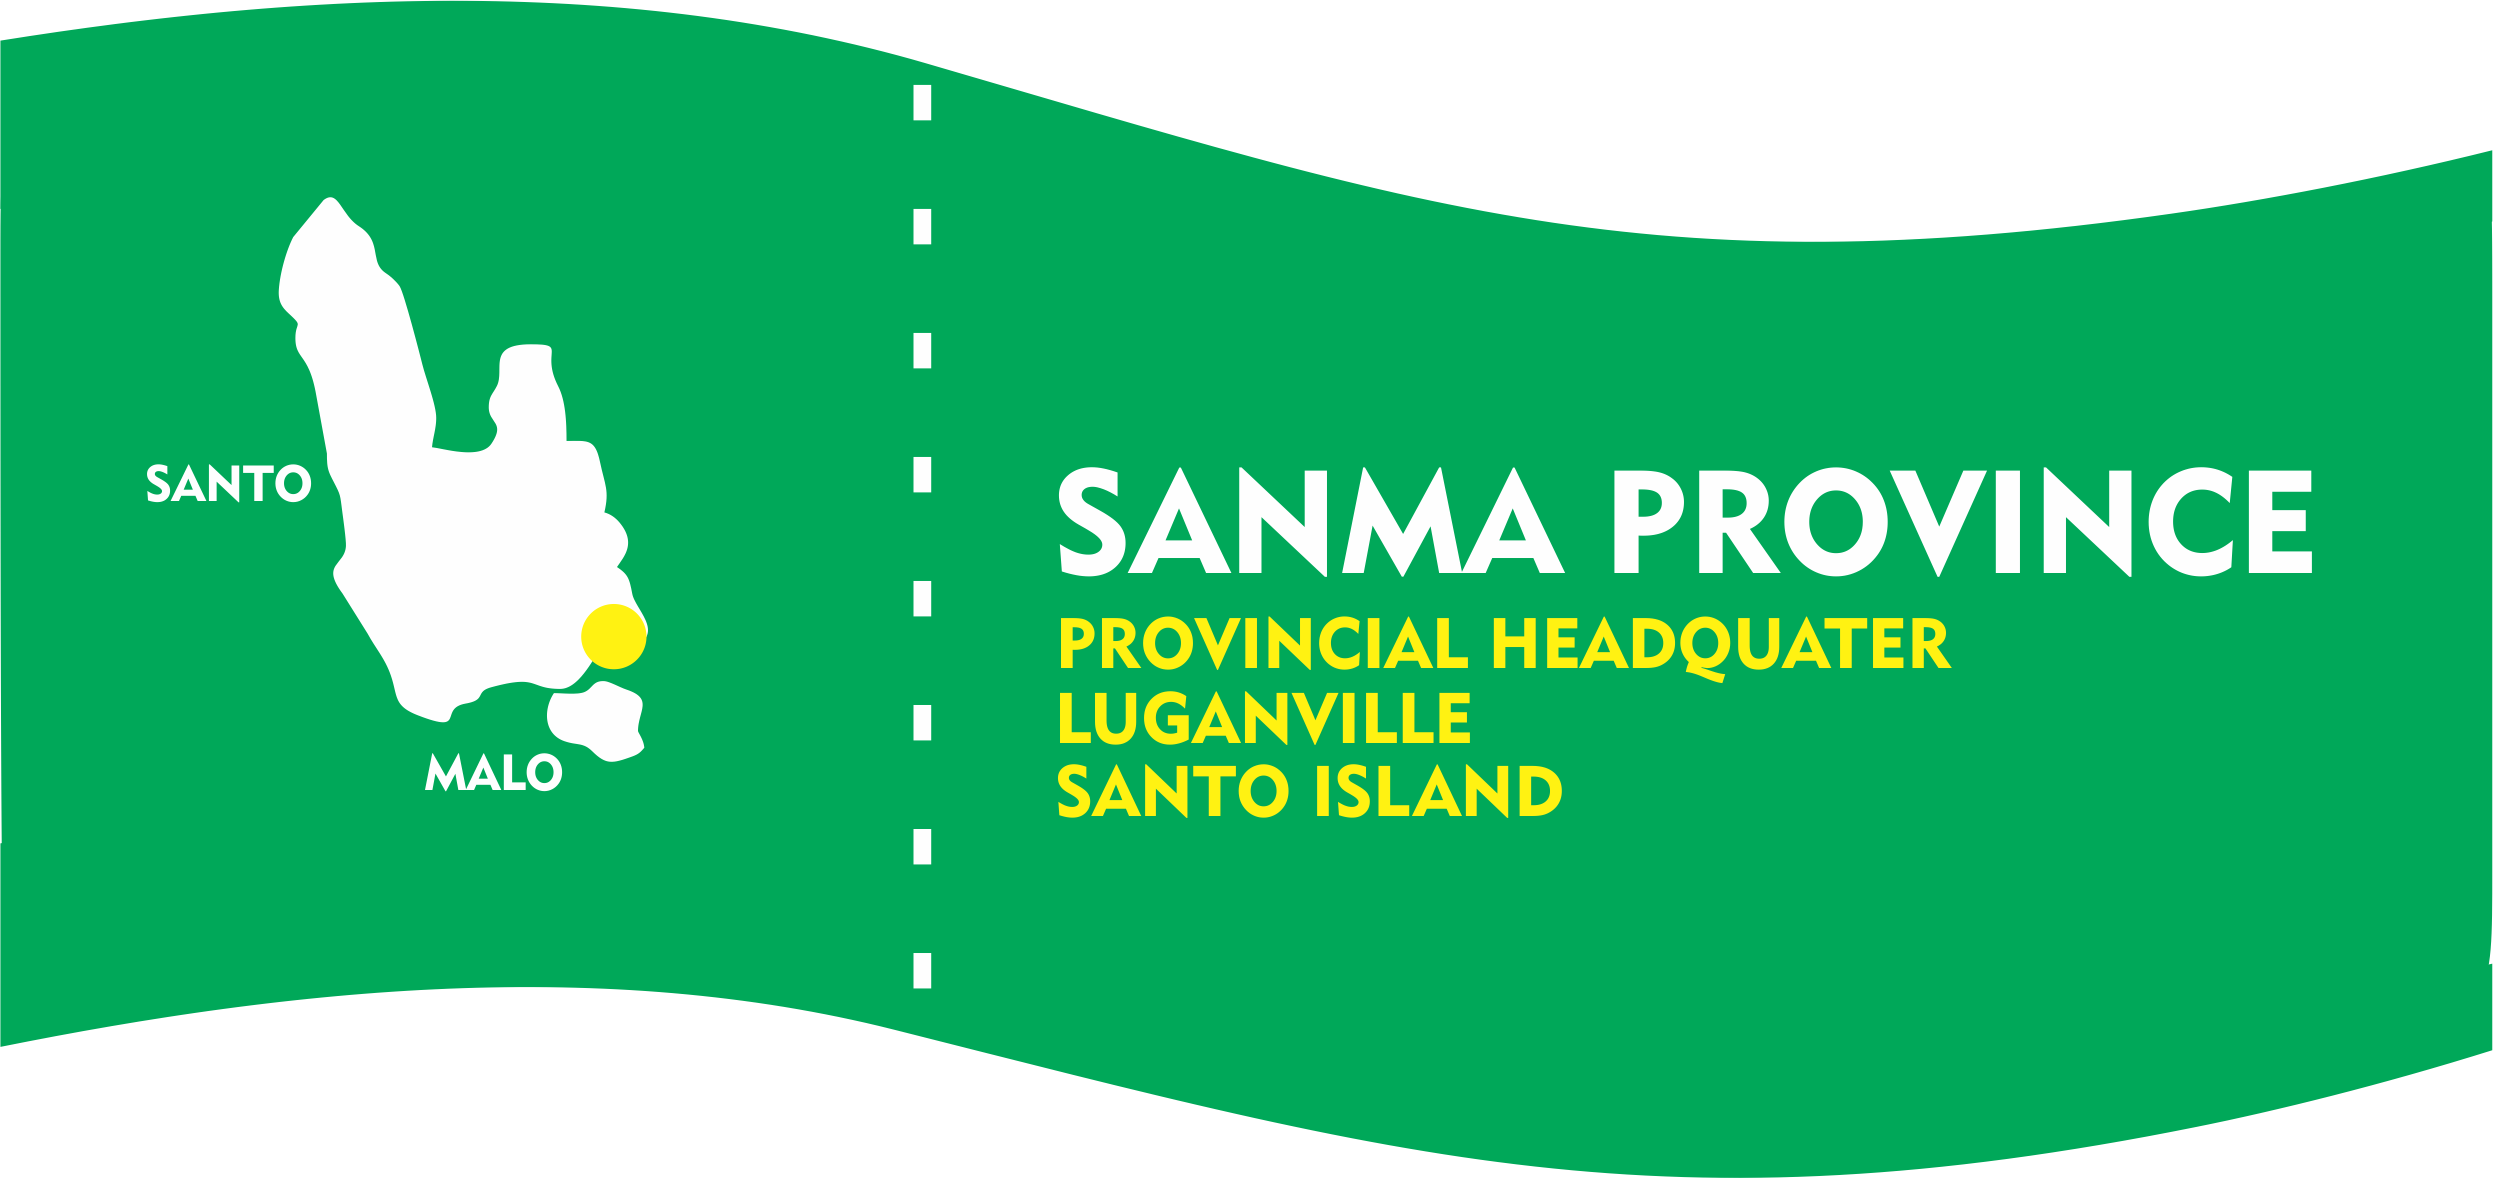 SANMA PROFILE